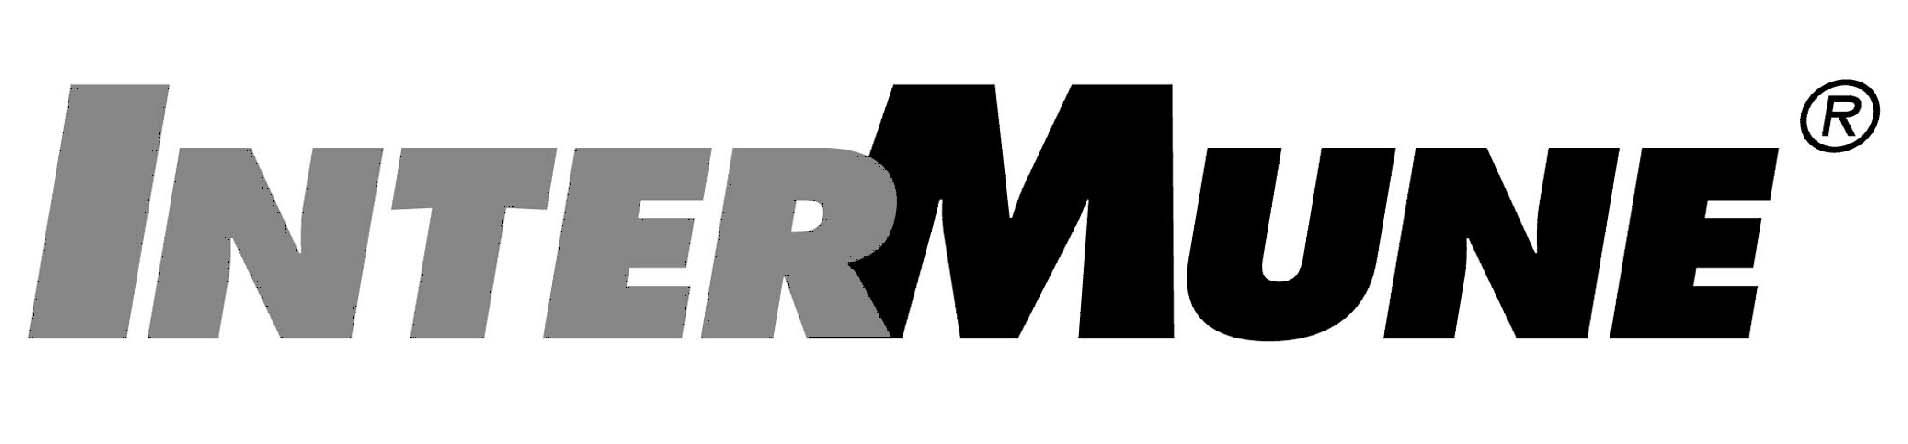 ITMN Logo.jpg